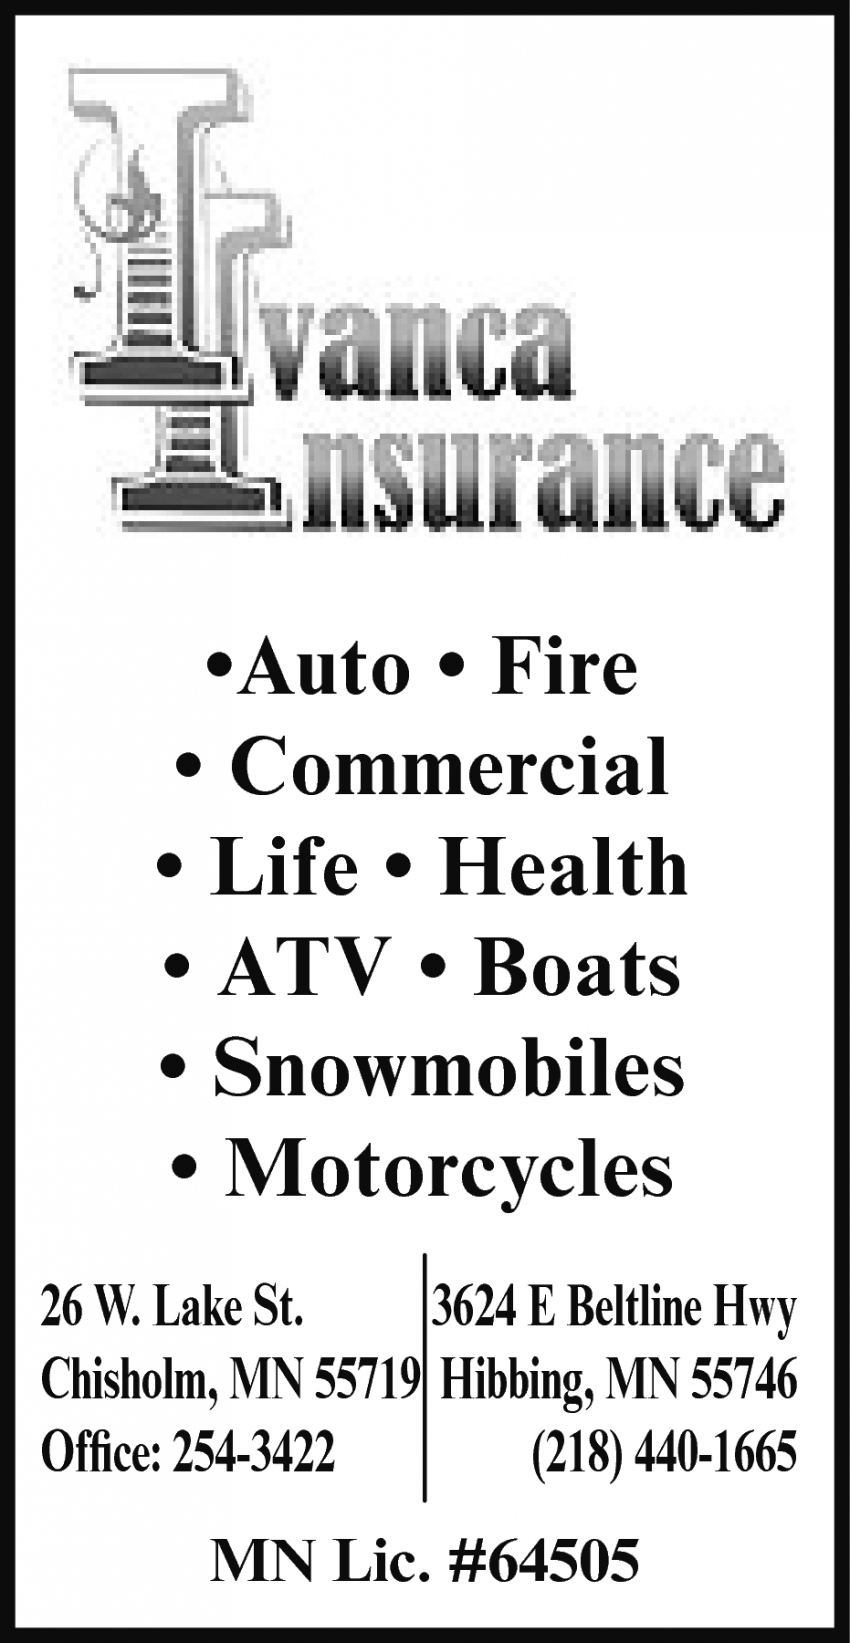 -Auto - Fire - Commercial - Life - Health - ATV - Boats